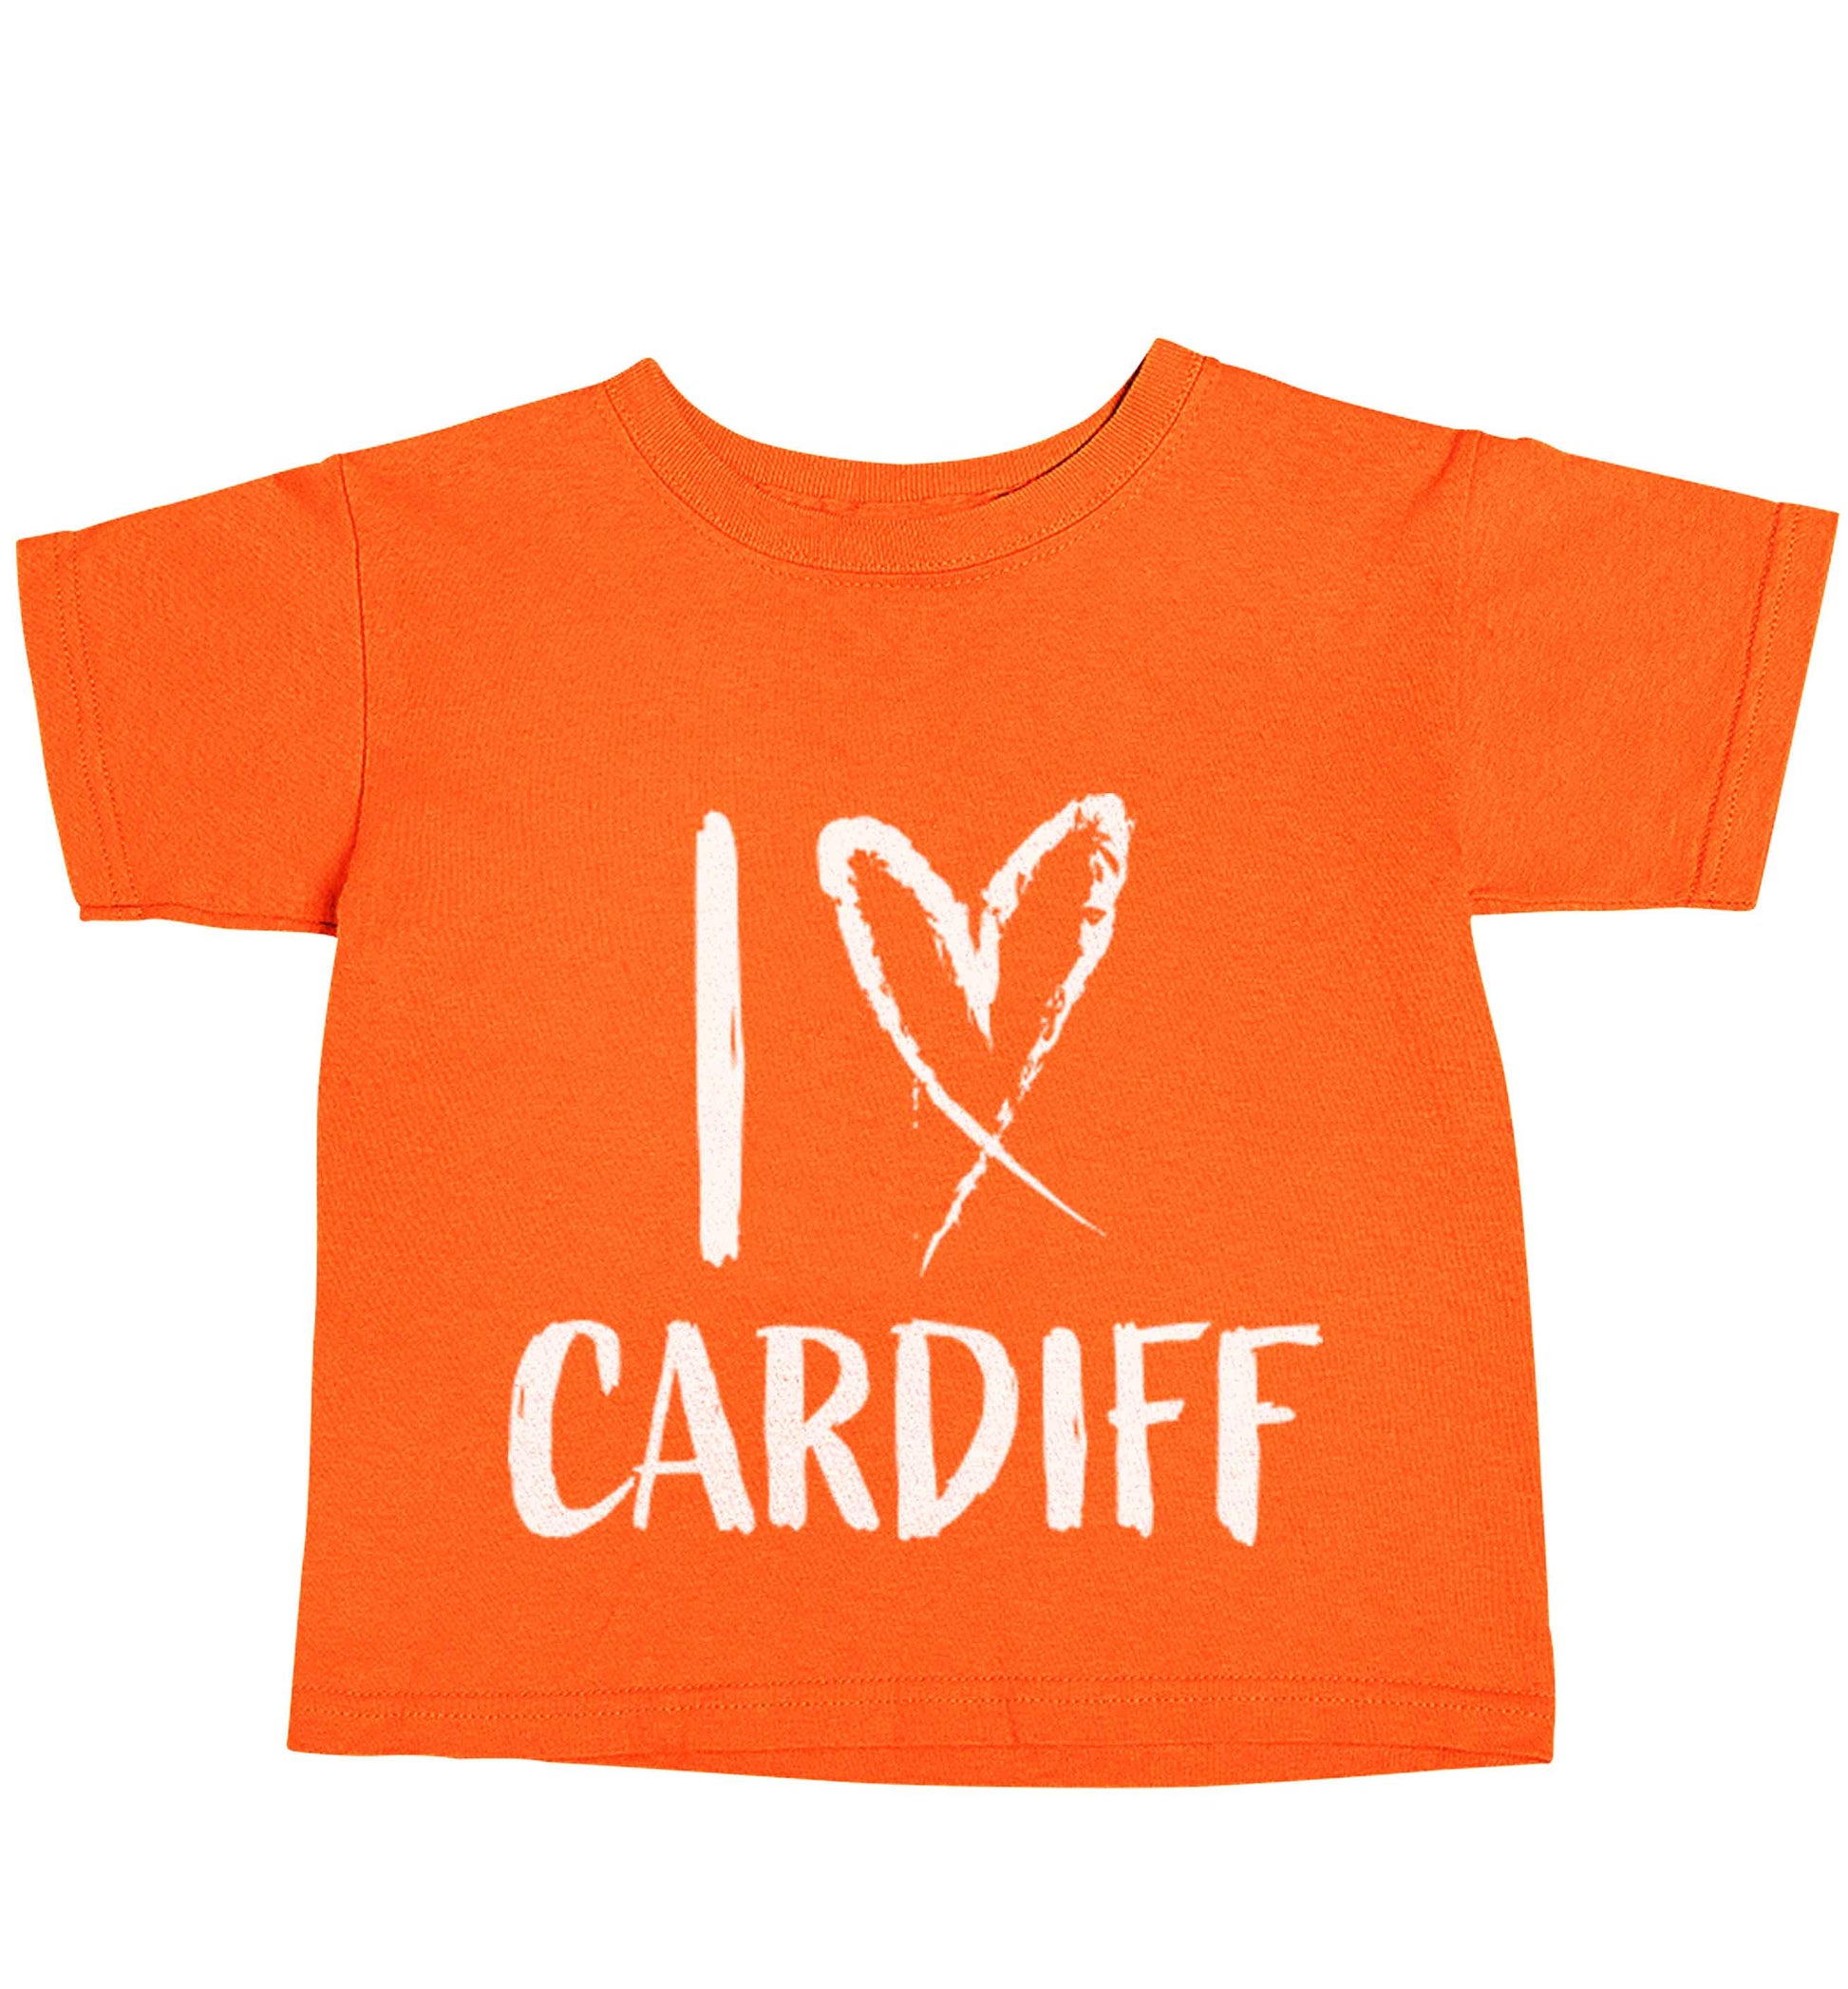 I love Cardiff orange baby toddler Tshirt 2 Years